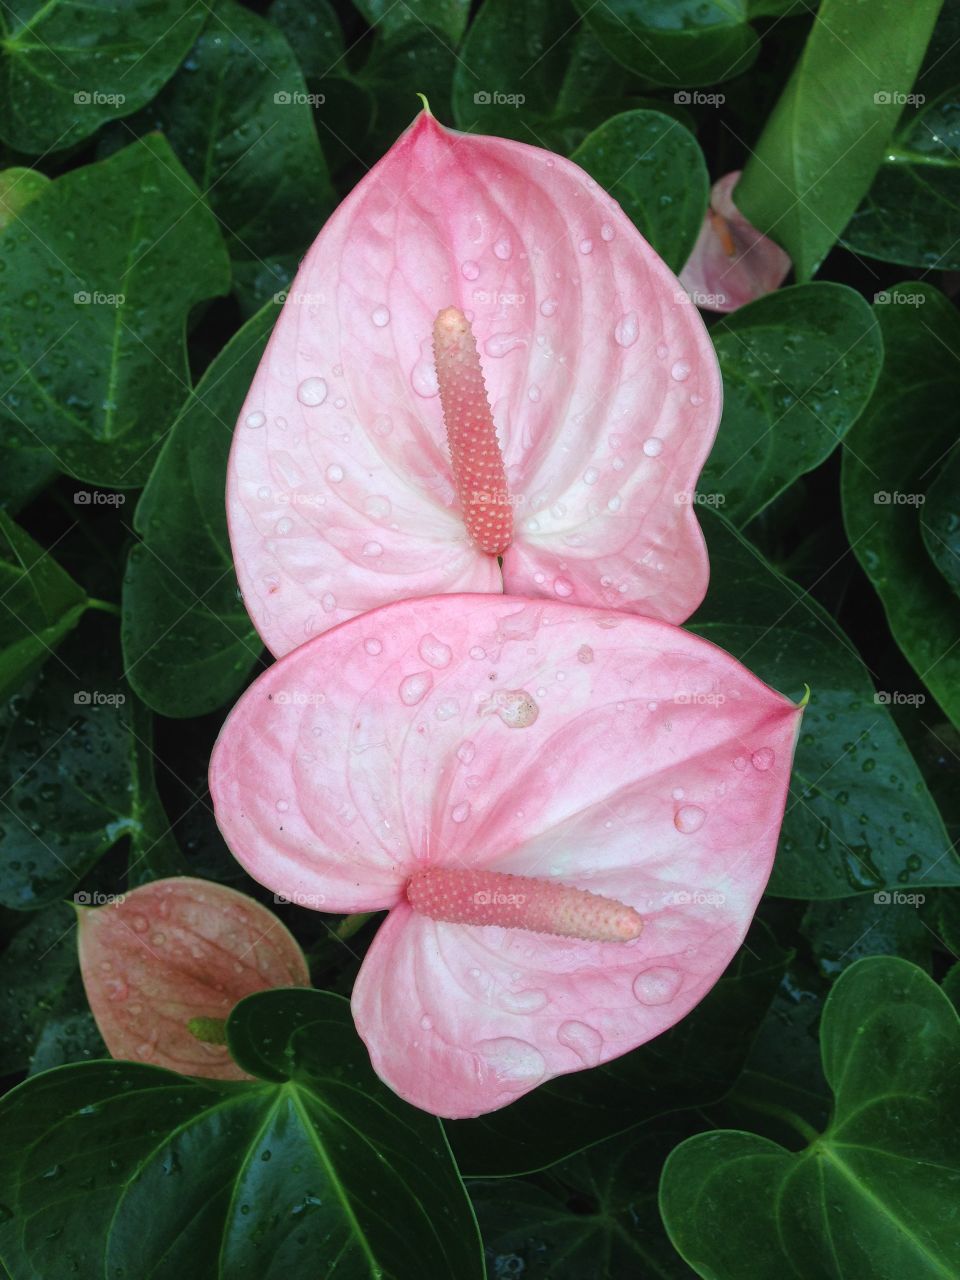 Water droplets on pink flowert